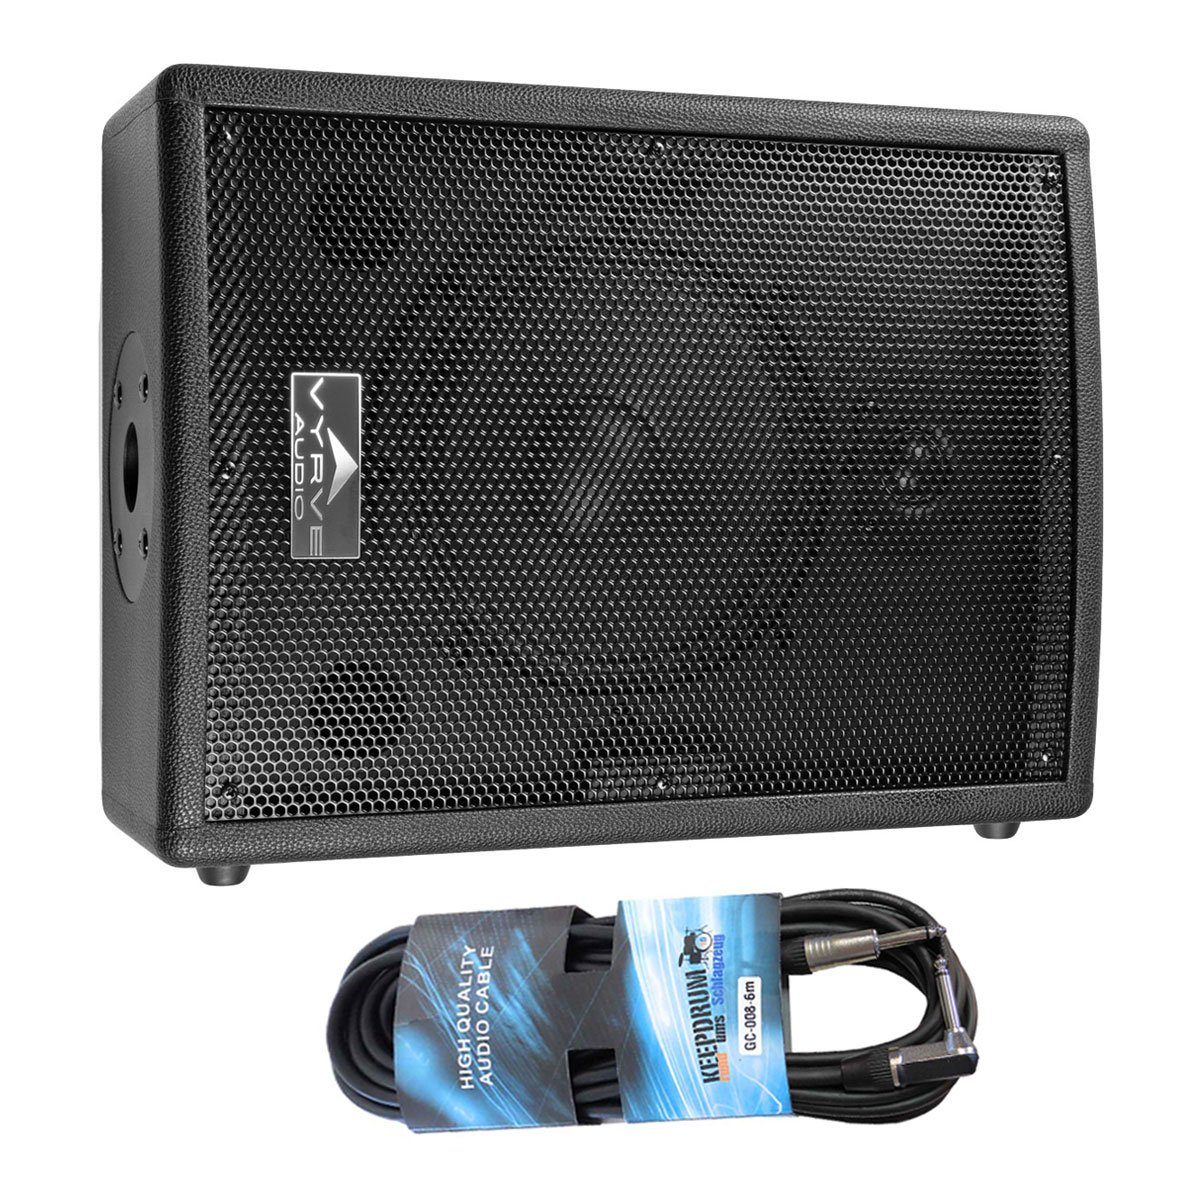 Vyrve Audio Vyrve Audio ATRIA Aktivmonitor + Klinkenkabel Home Speaker